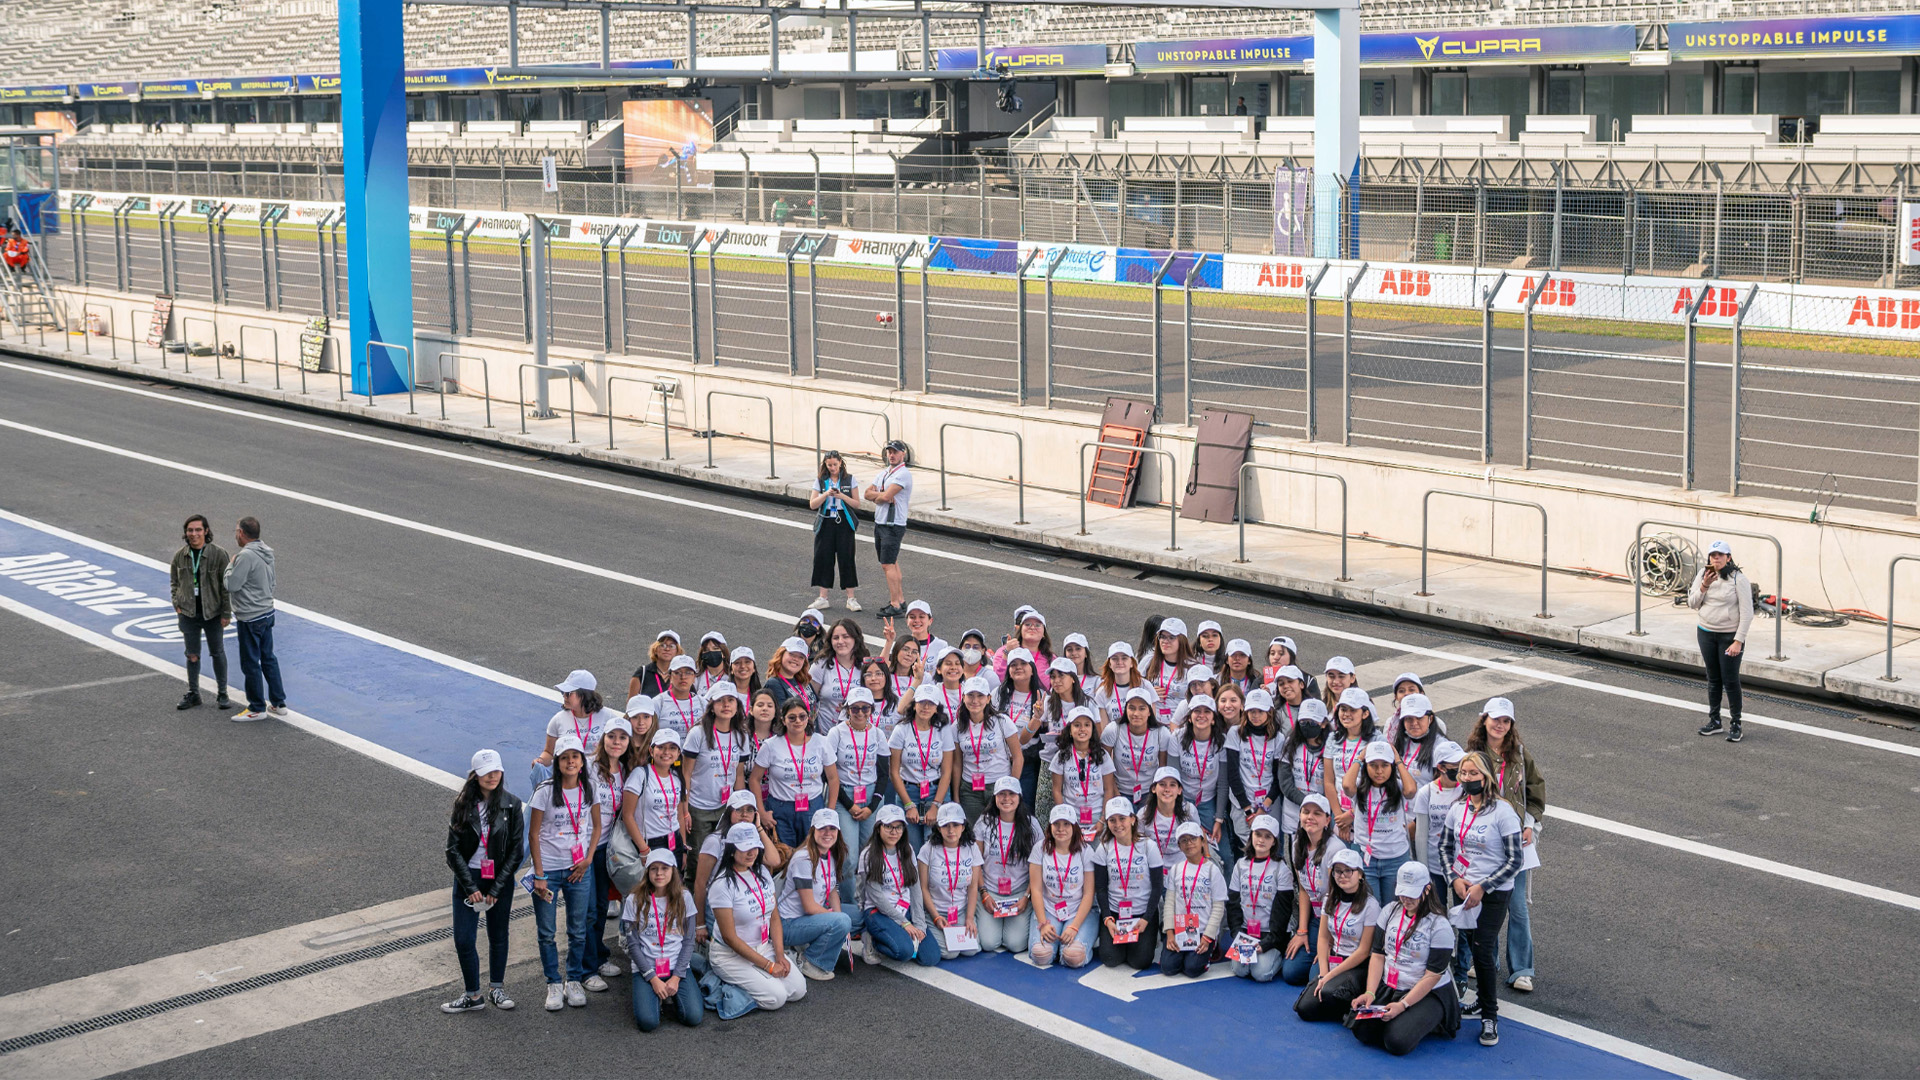 FIA-Formula-E-Girls-on-Track-Article-Image-by-AutomotiveWoman